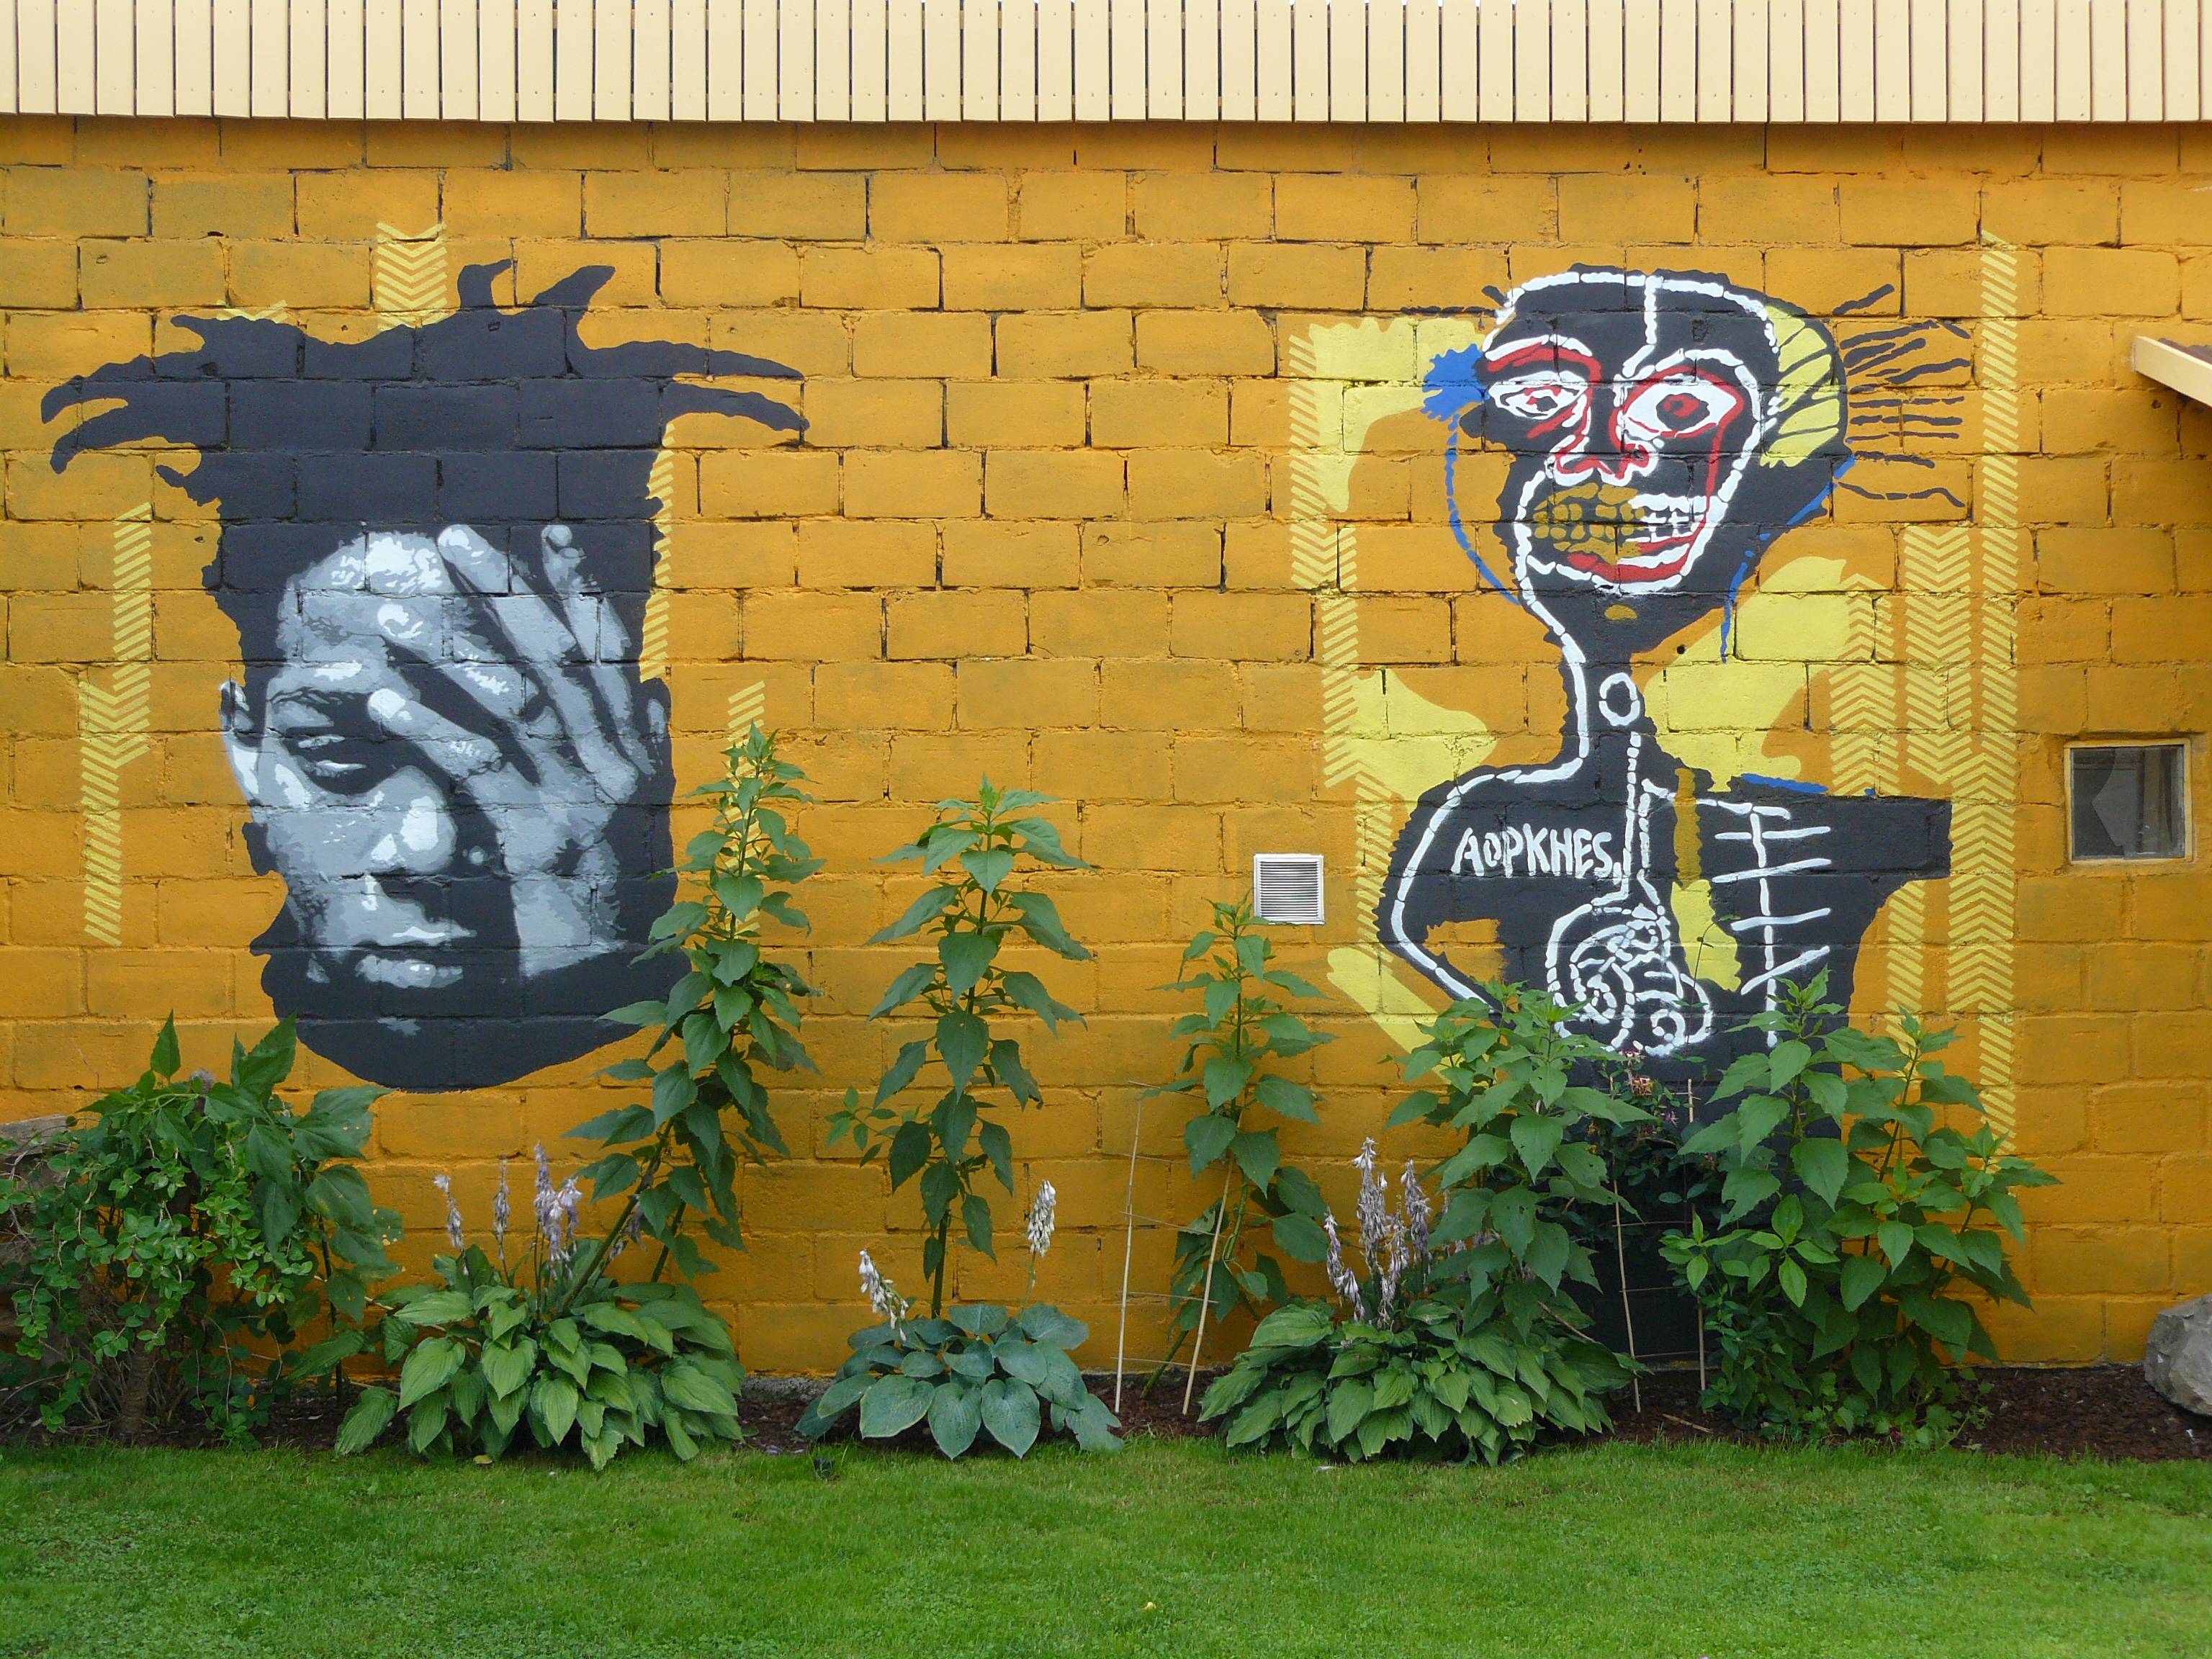 Basquiat Wallpapers Wallpaper Cave